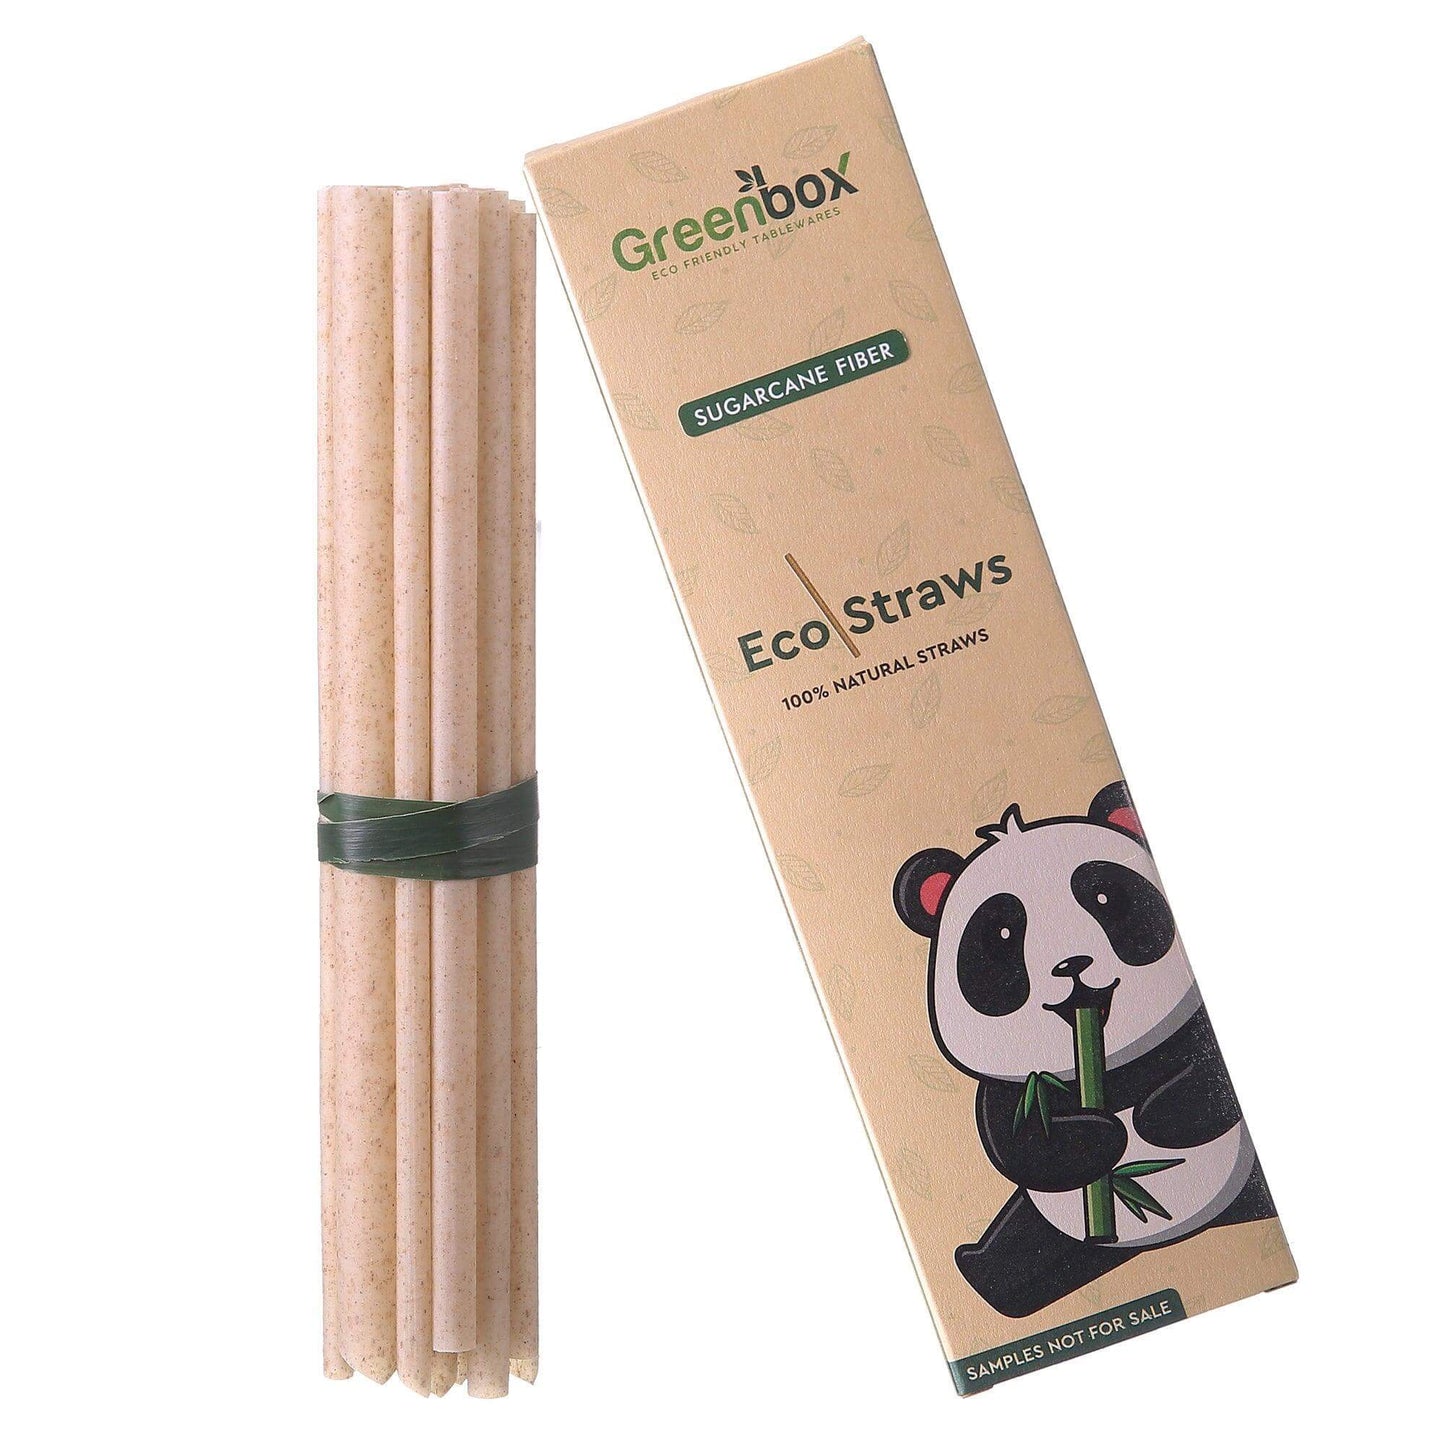 Sugarcane Fiber Straw - GREENBOXSTRAW